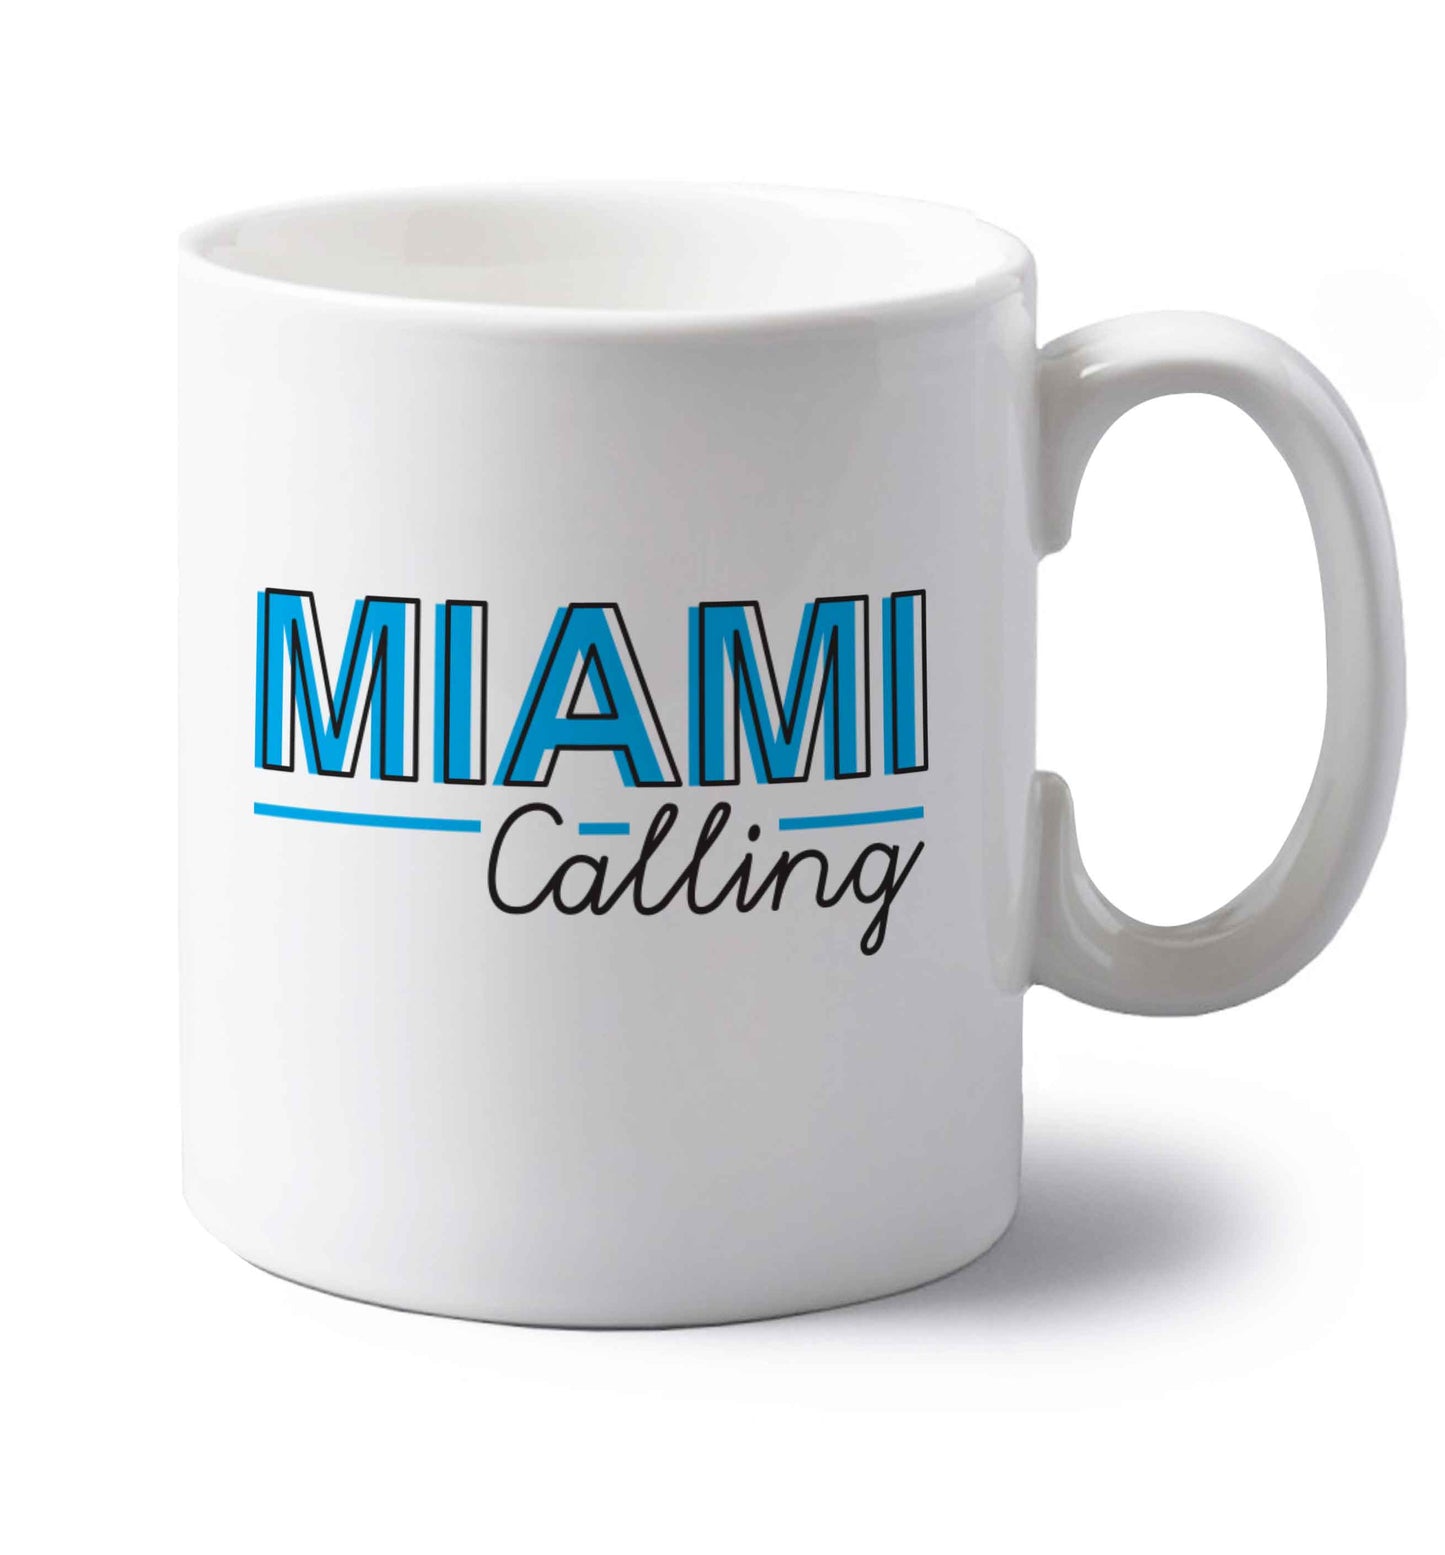 Miami calling left handed white ceramic mug 